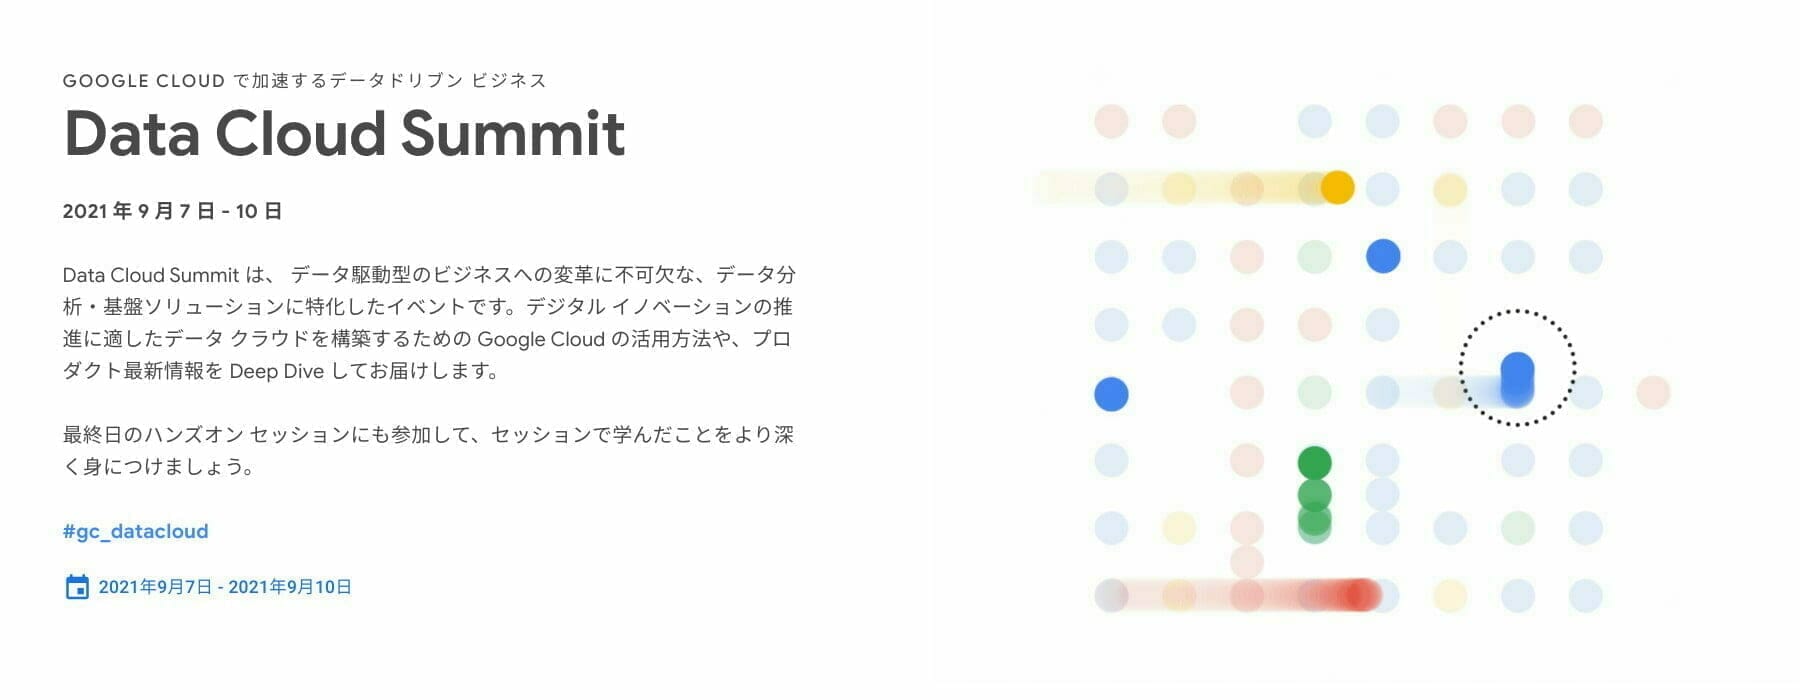 [GCP] Data Cloud Summit